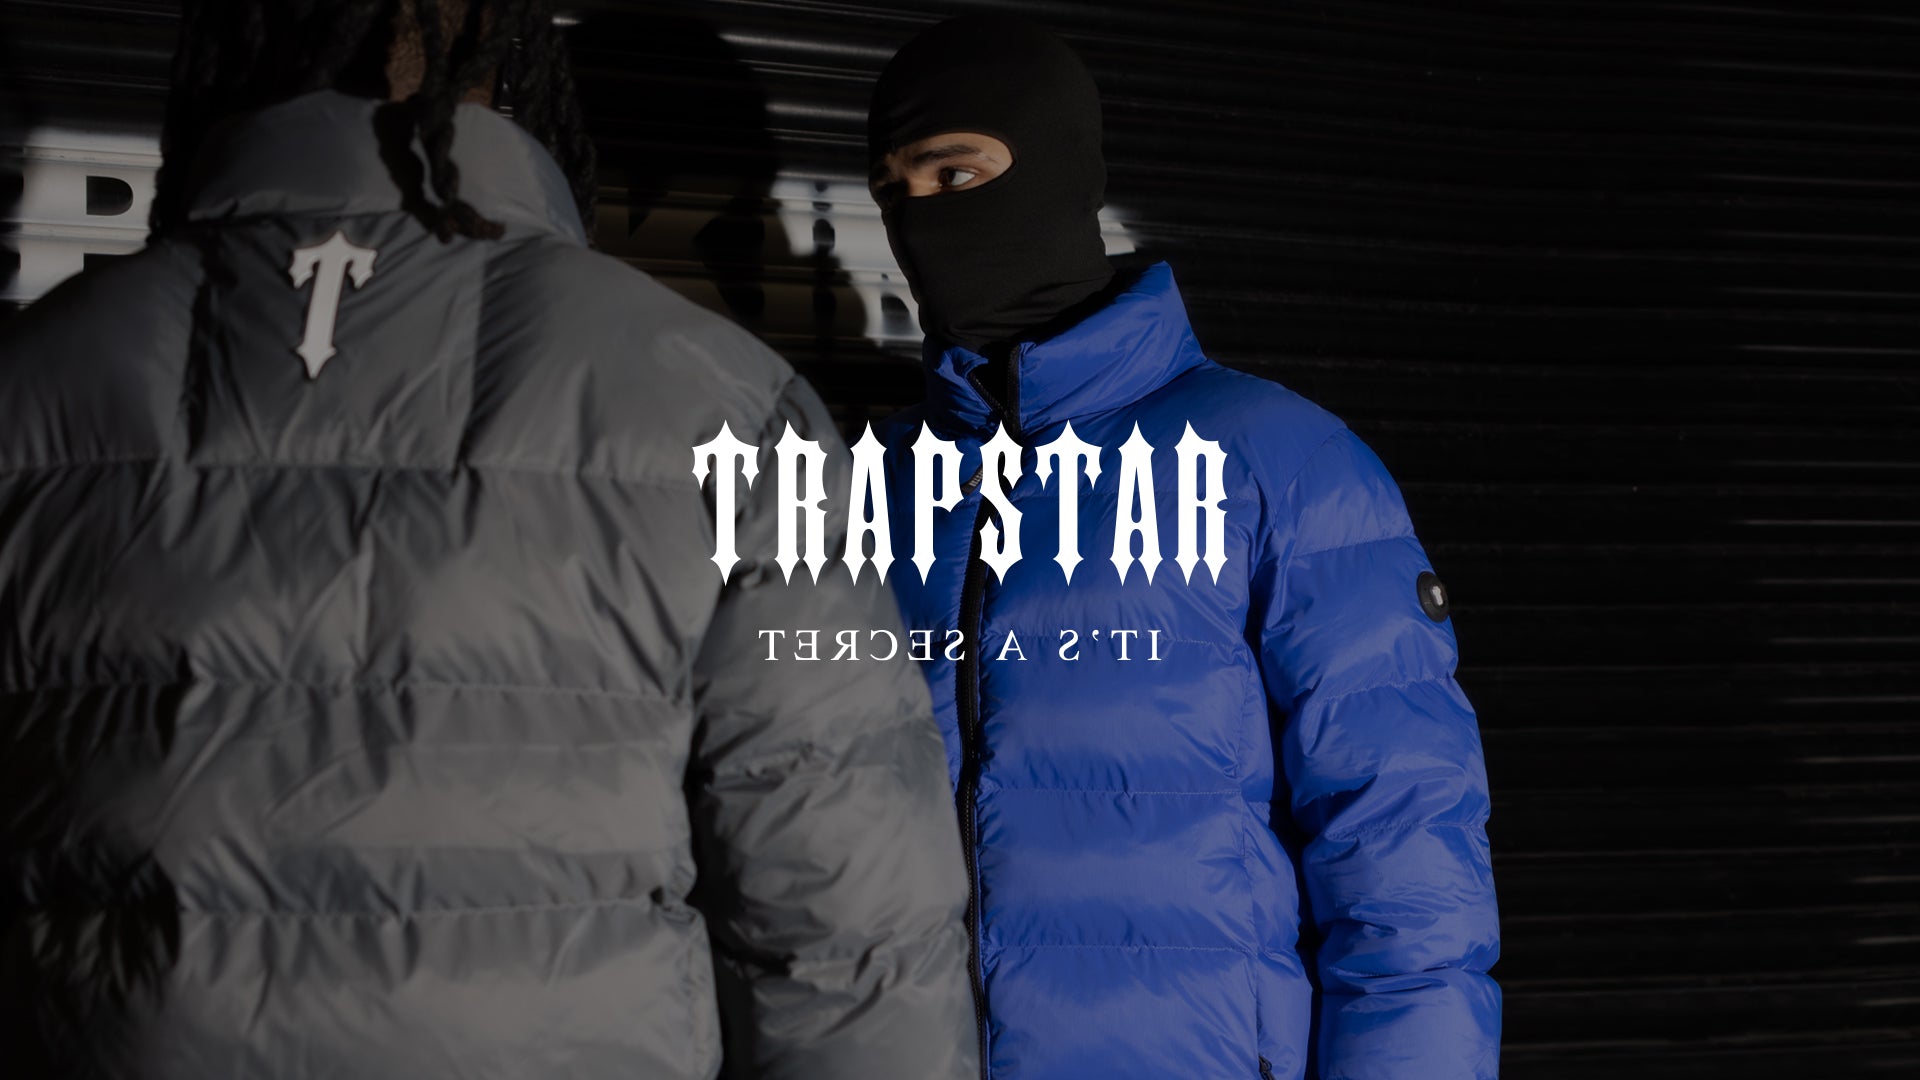 Trapstar London – Trapstar London